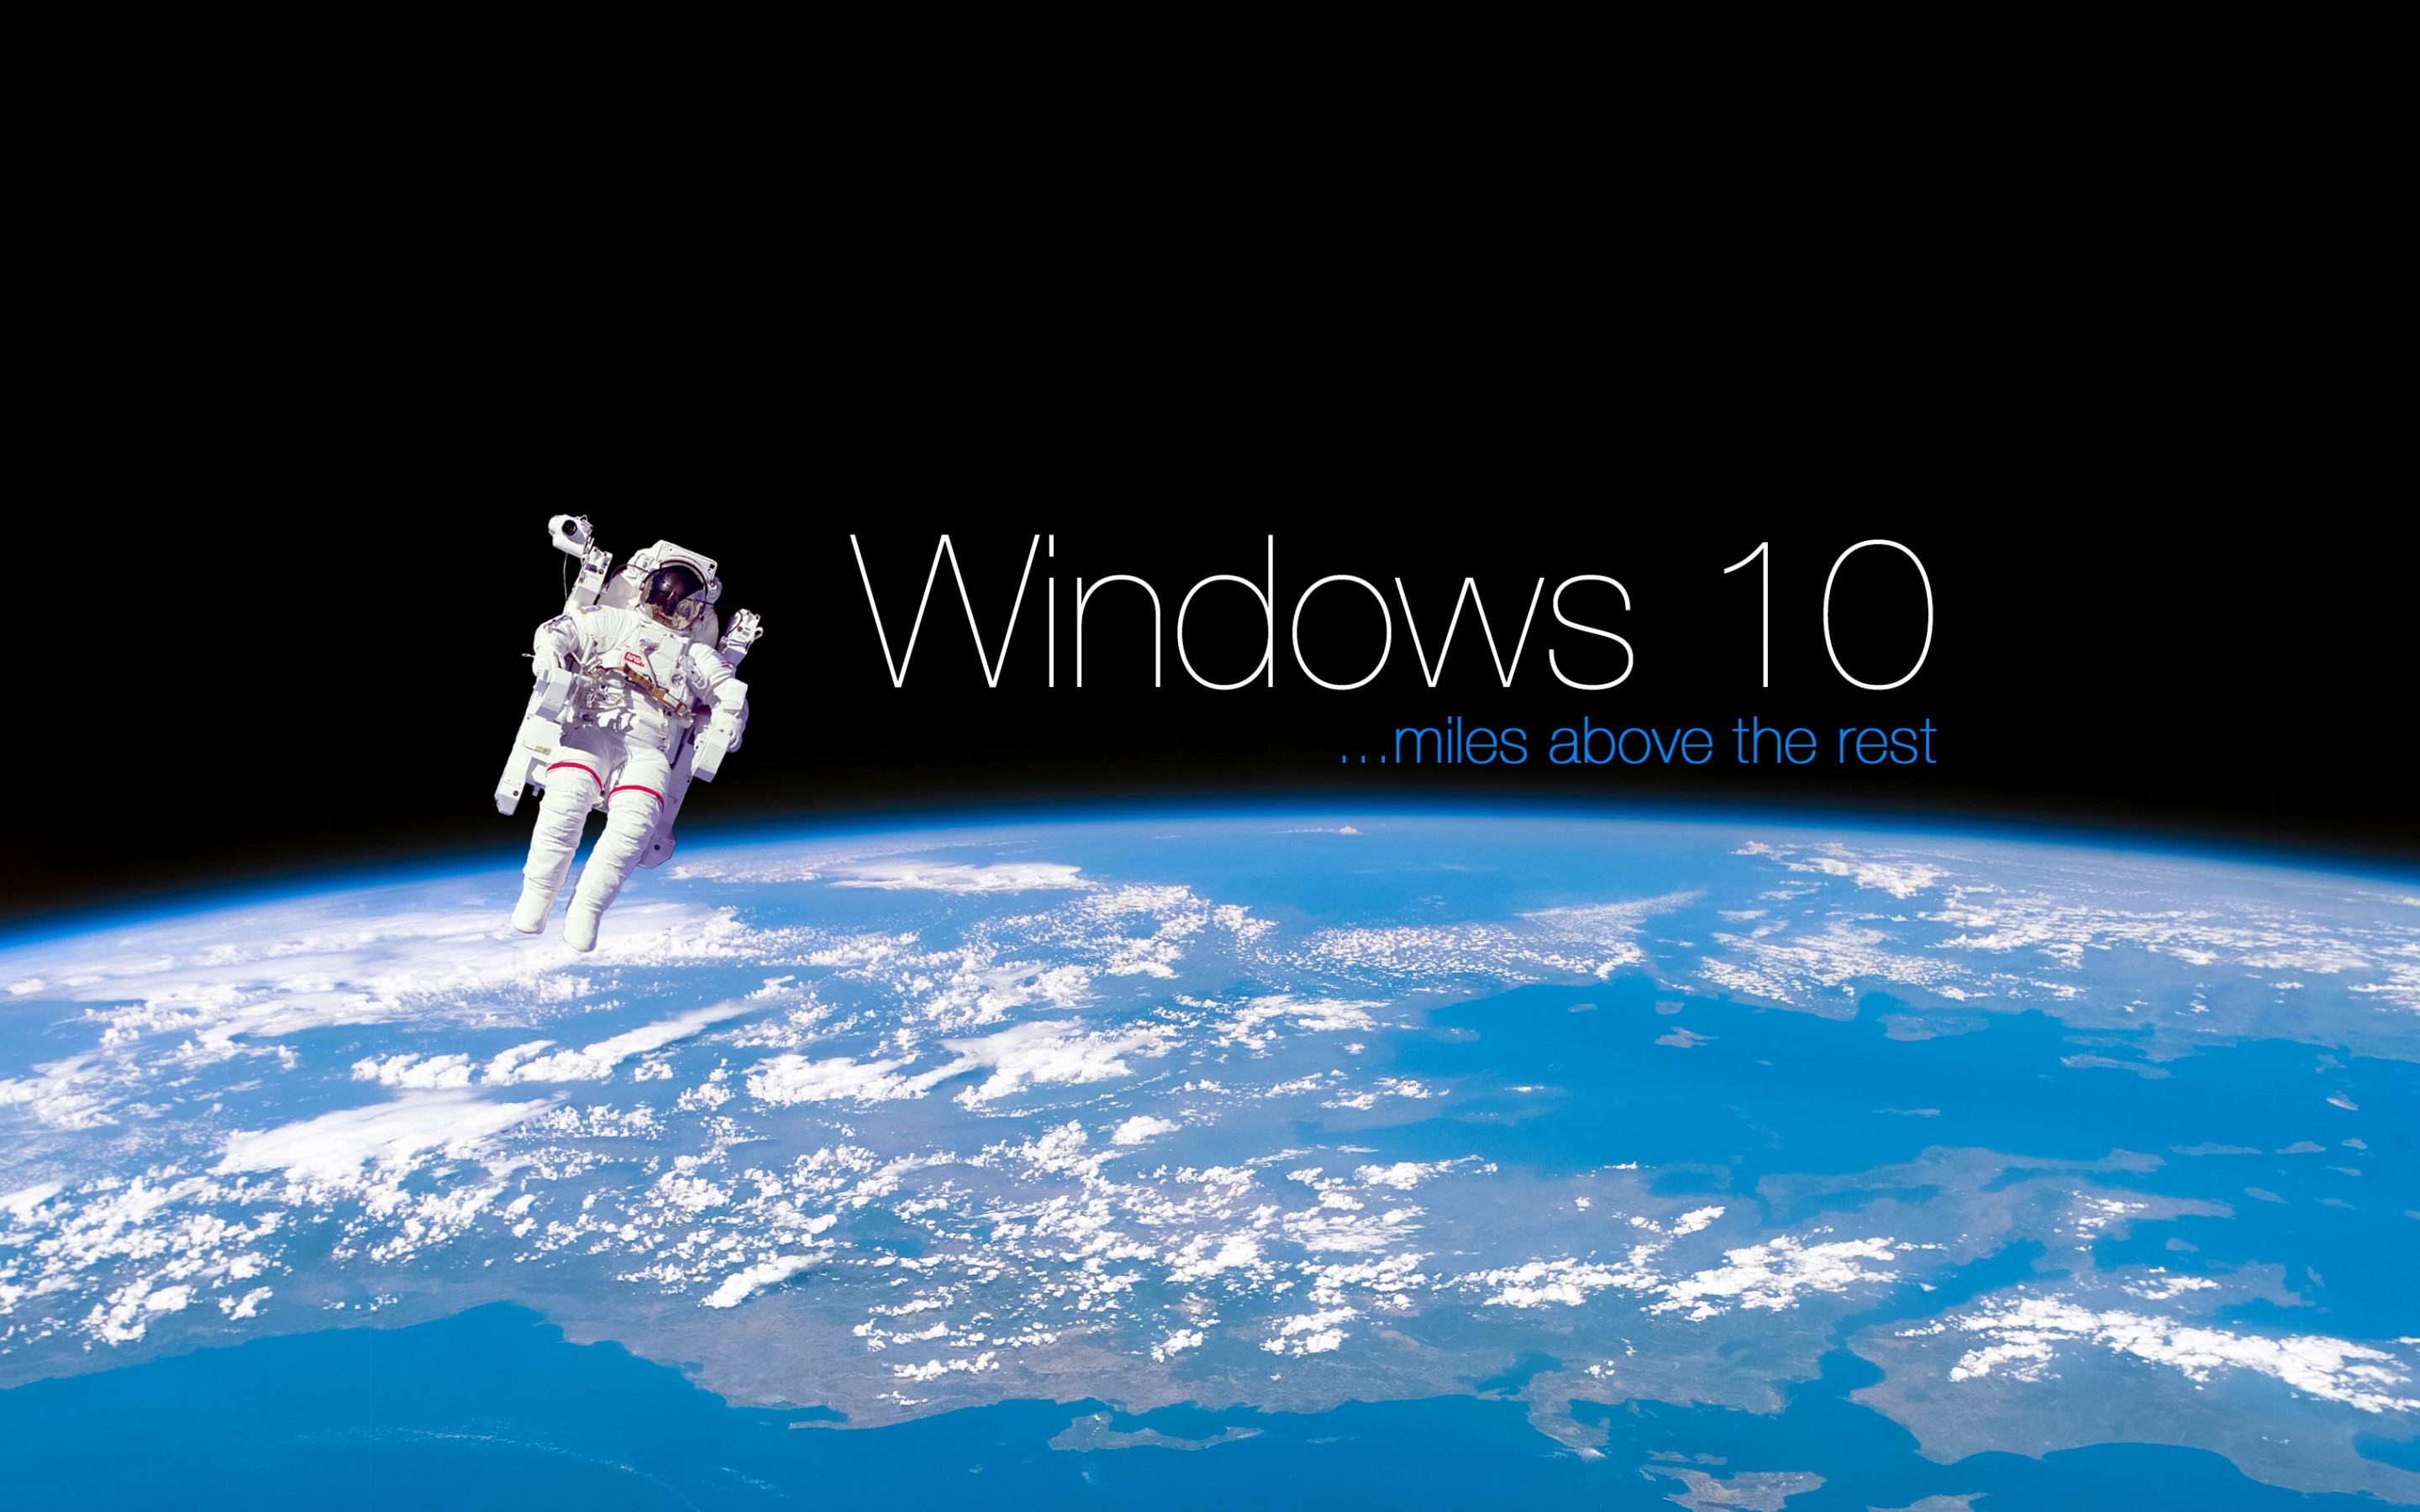 Windows 10 space 4k wallpaper 2880x1800   Wallpaper   Wallpaper Style 2880x1800